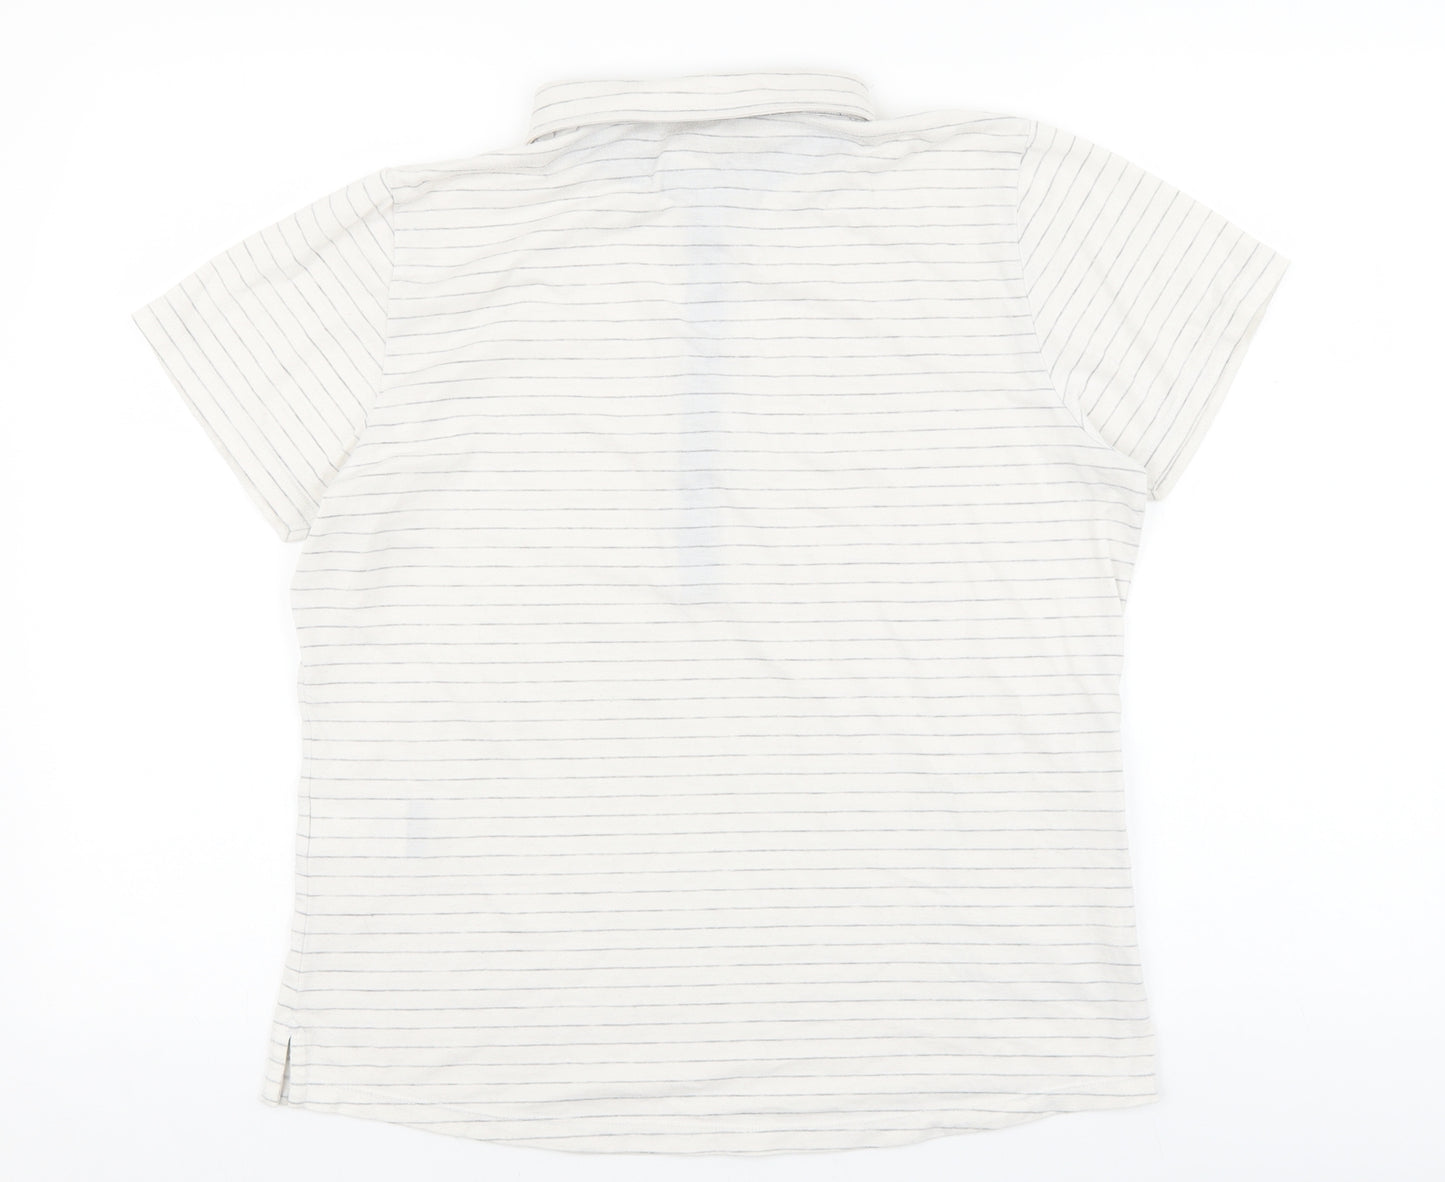 Rohan Womens White Striped Elastane Basic Polo Size 14 Collared - Golf Top